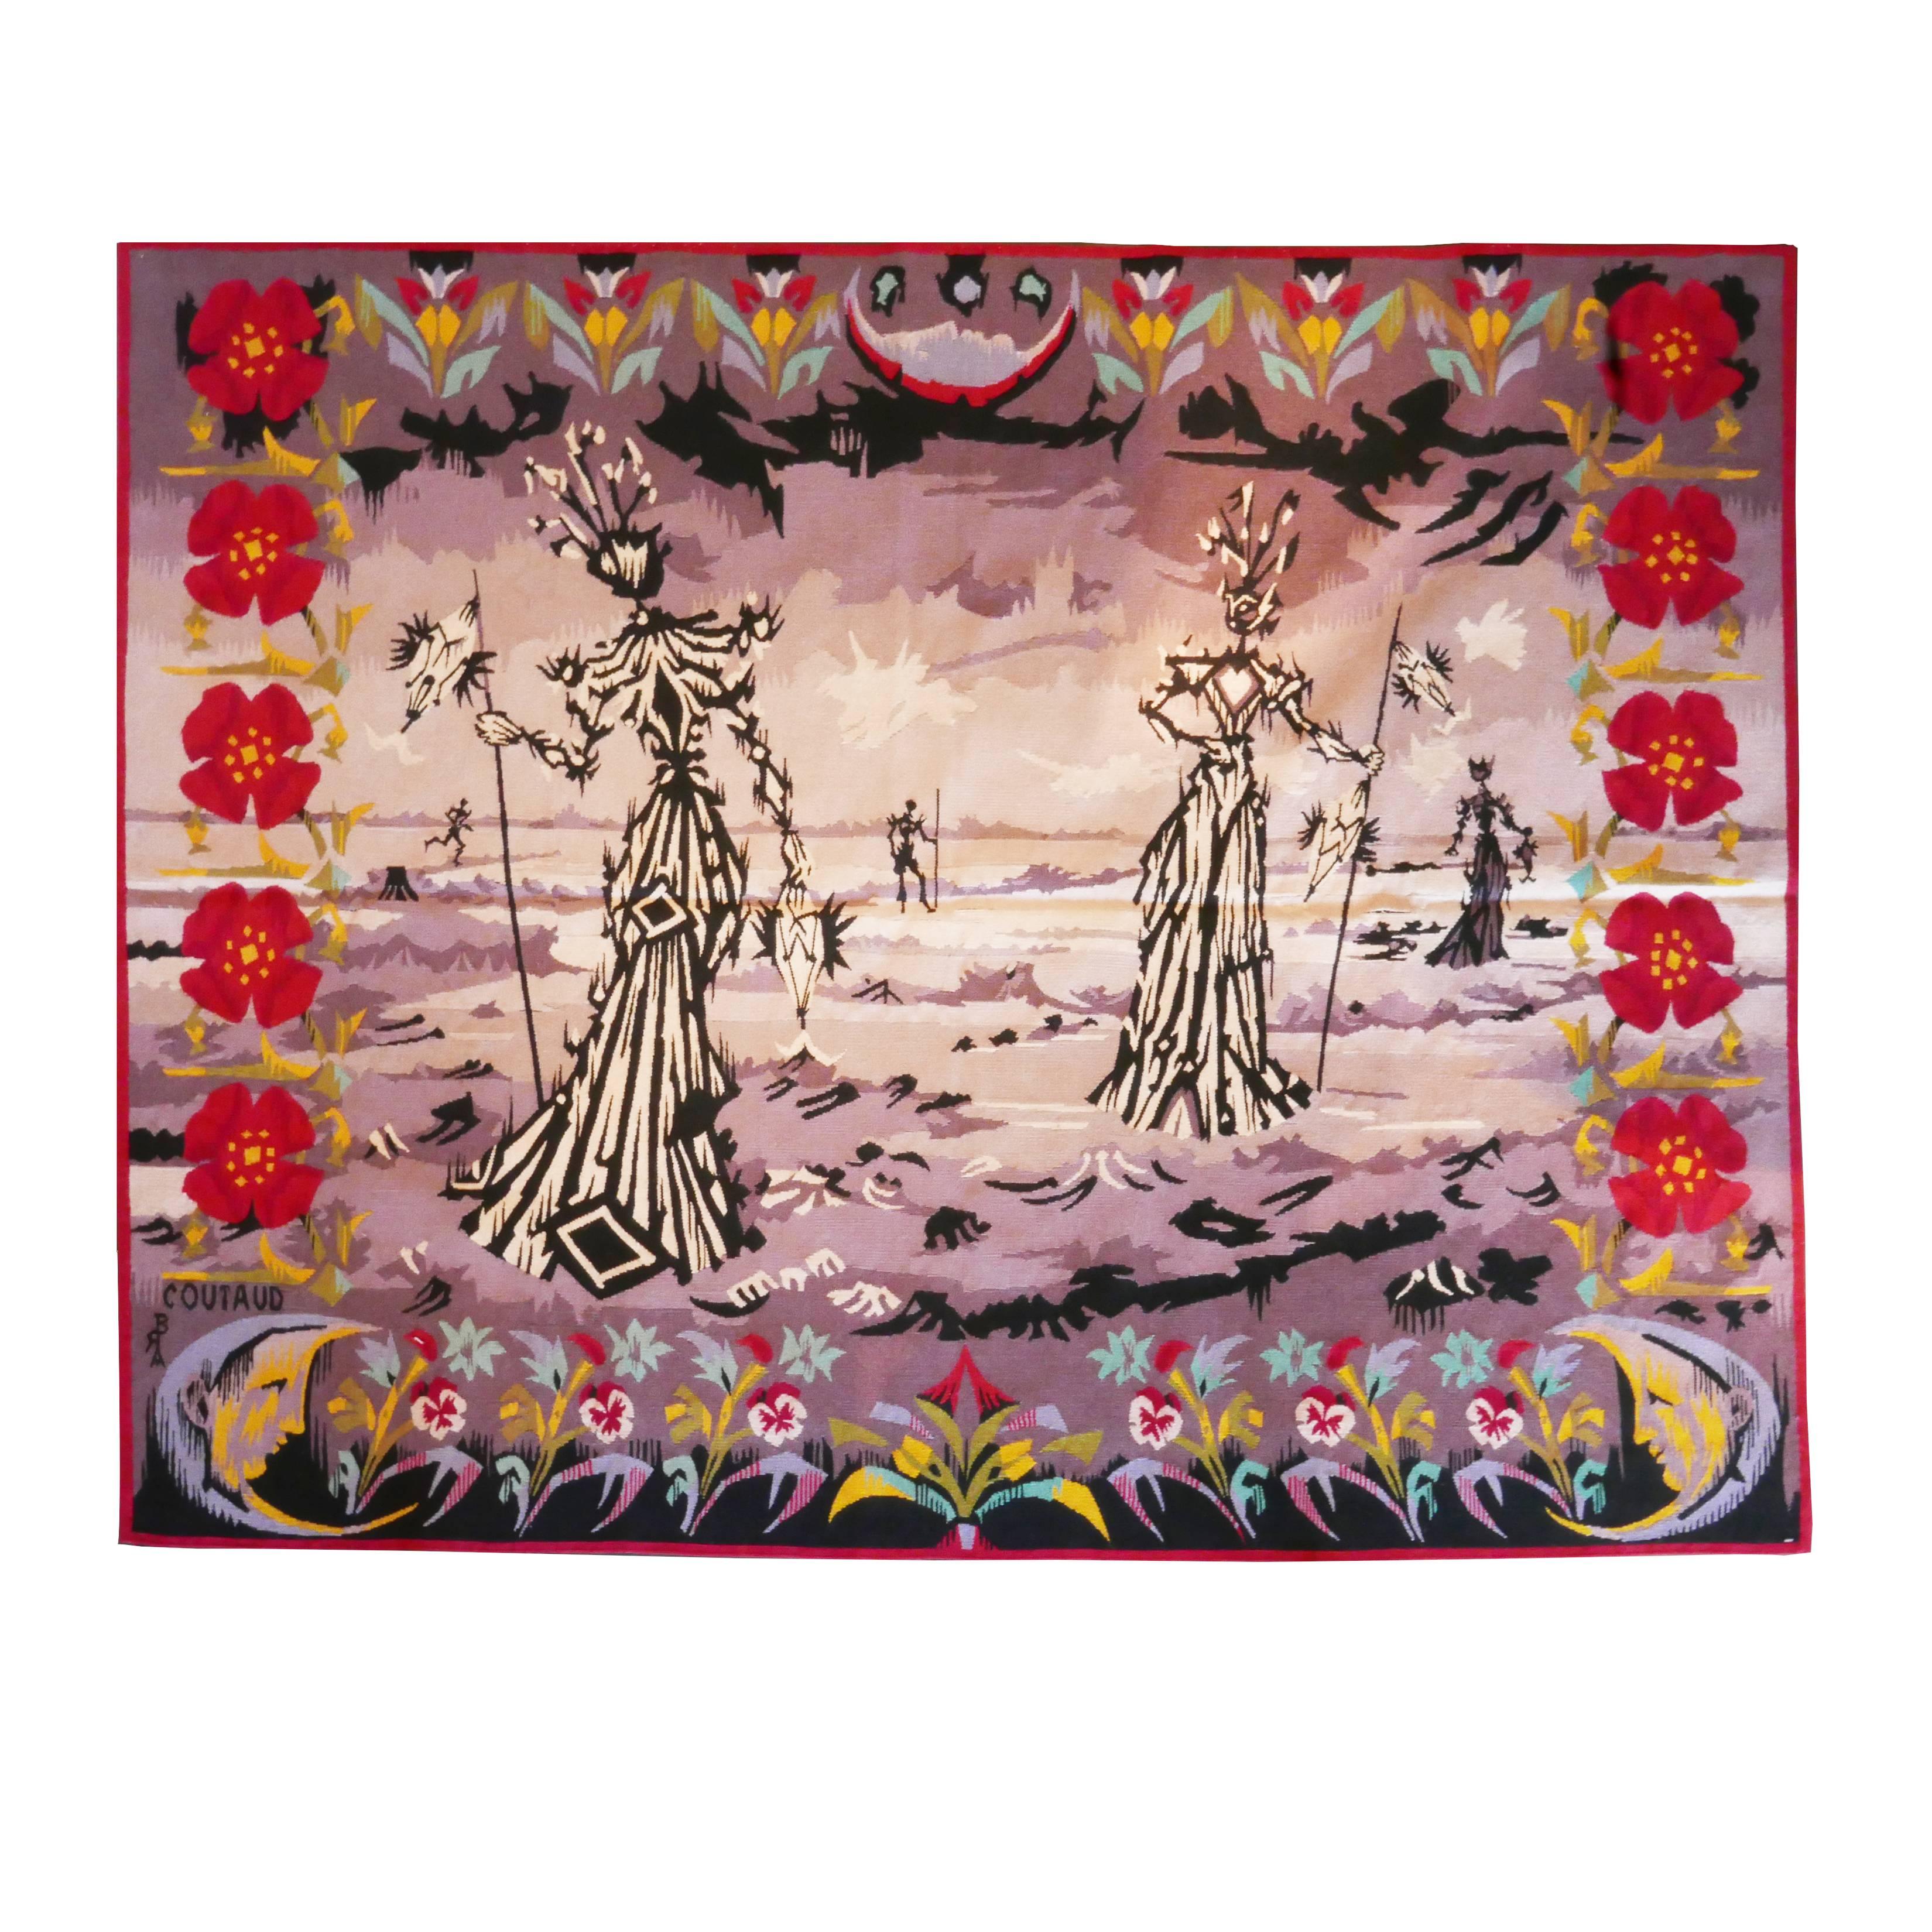 Lucien Coutaud 1950s Original Aubusson Tapestry